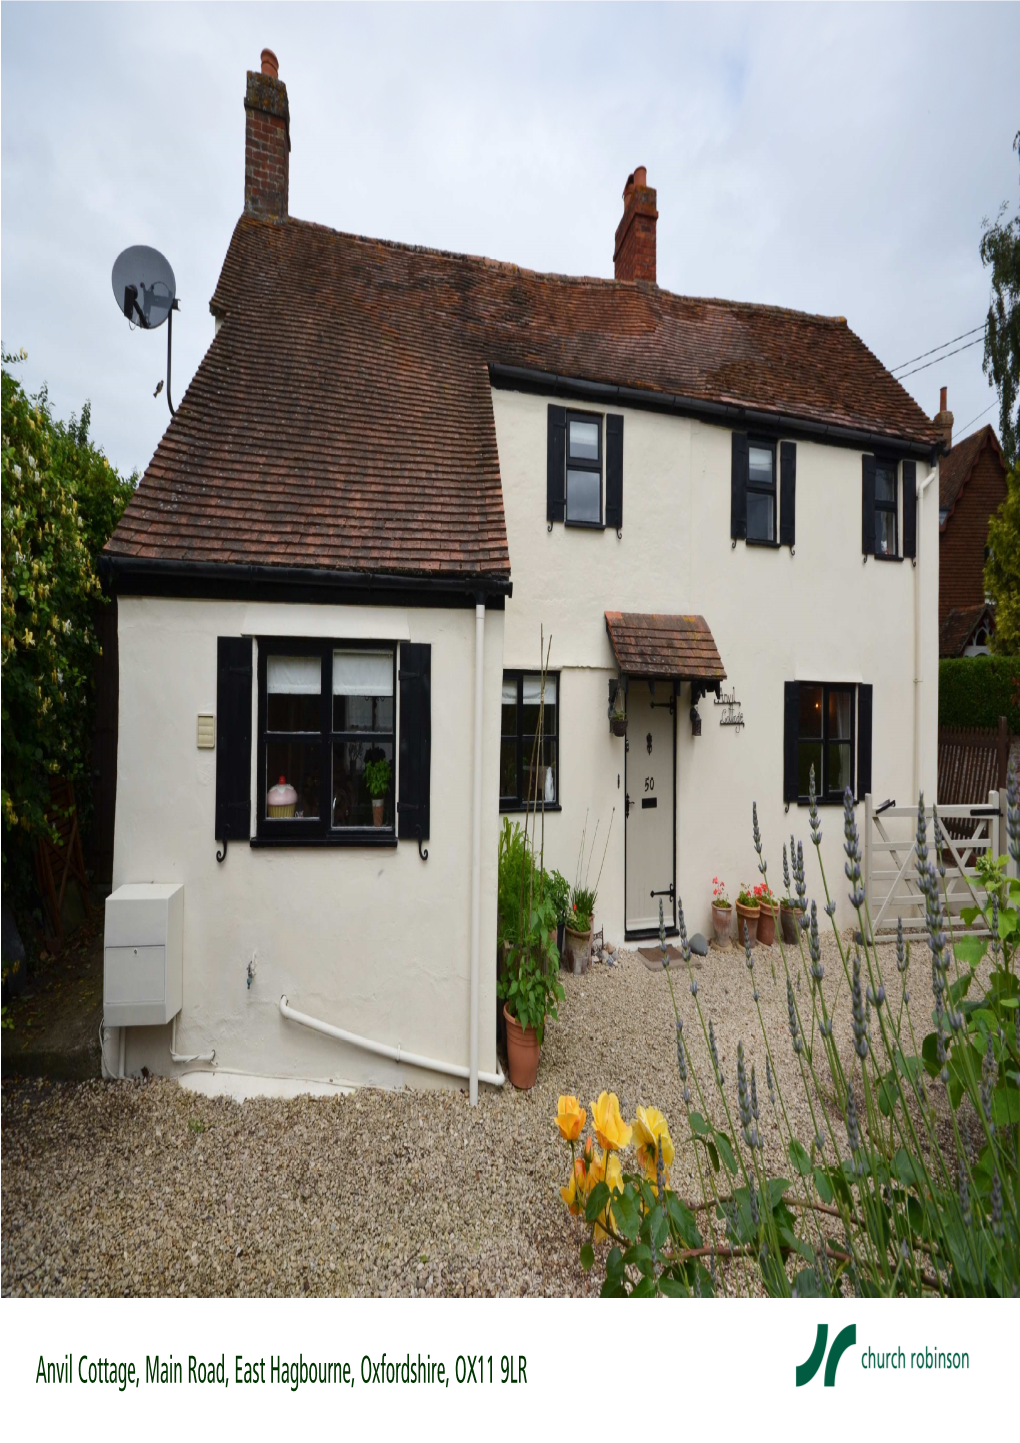 Anvil Cottage, Main Road, East Hagbourne, Oxfordshire, OX11 9LR